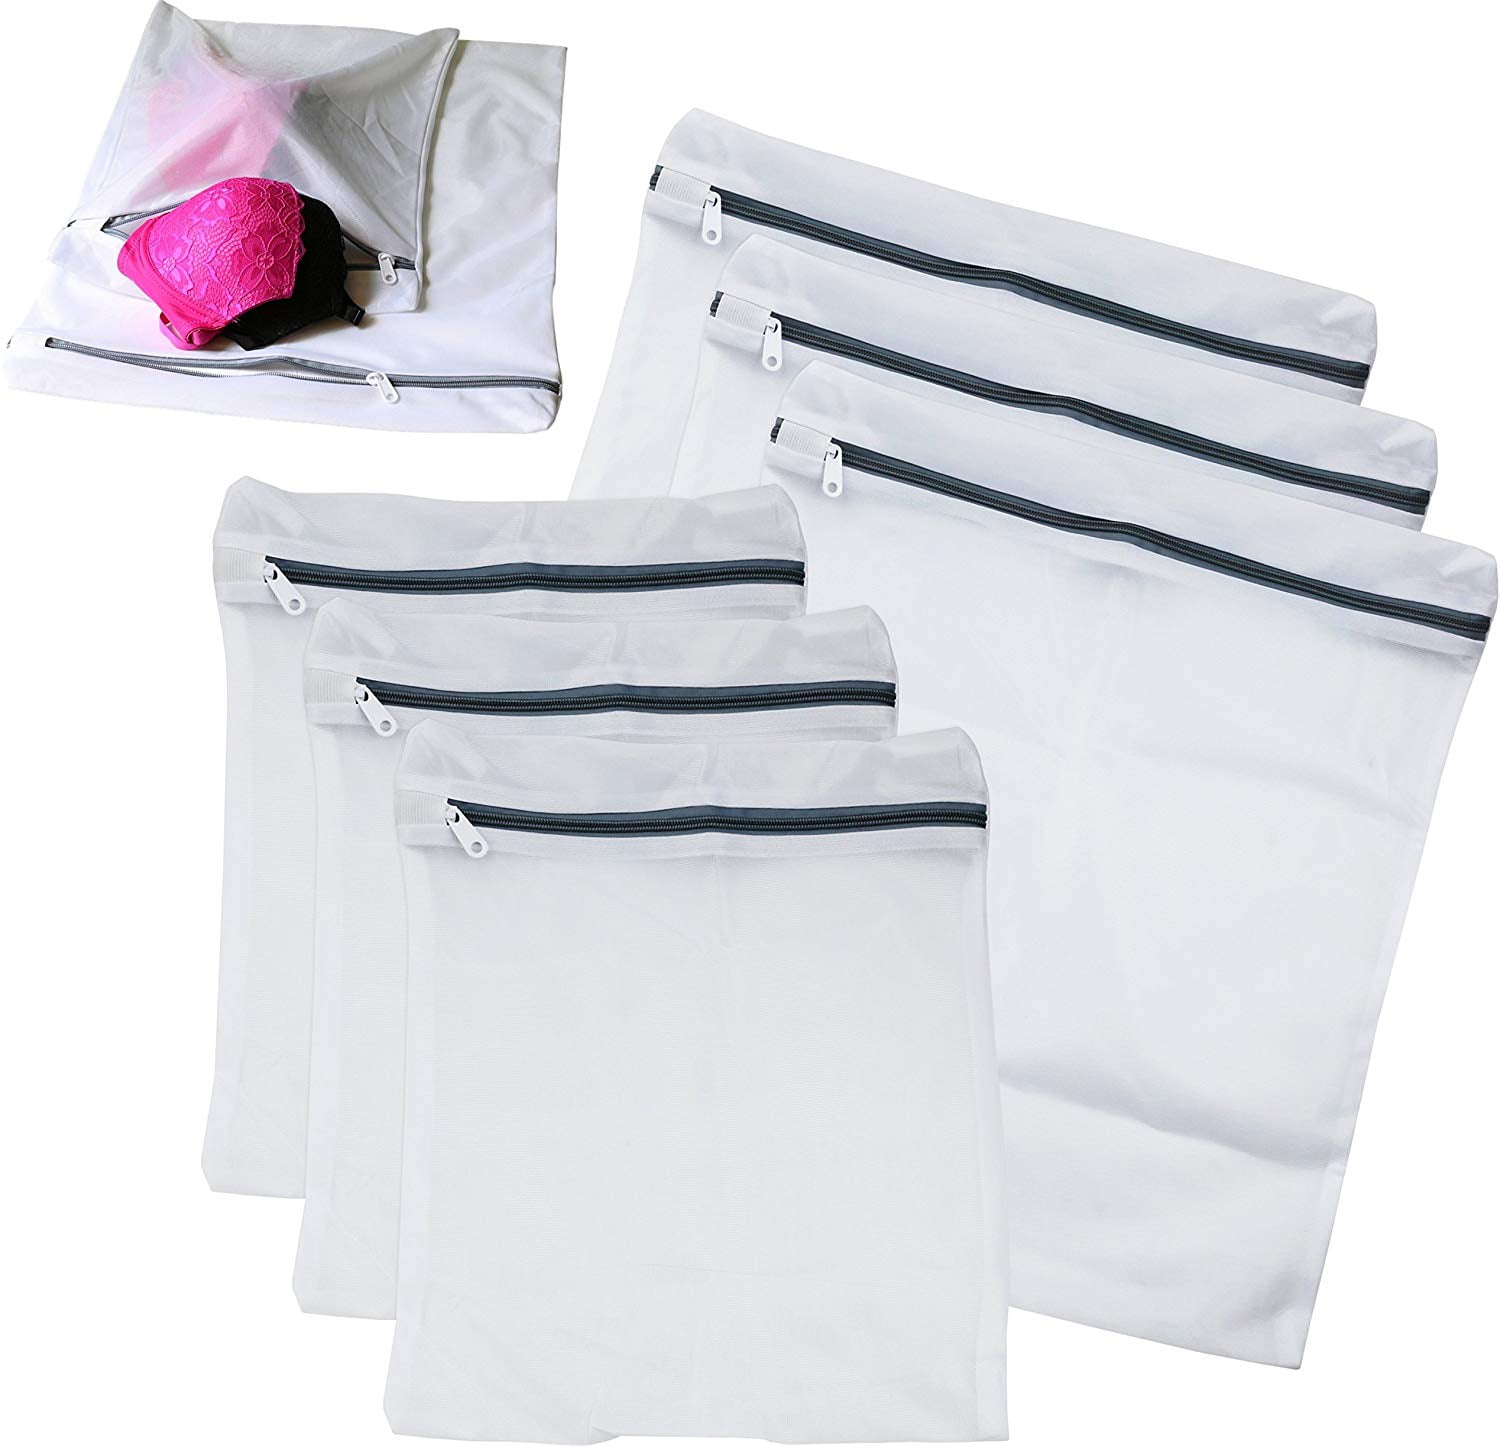 3 Set Protection Zipper Mesh Laundry Storage Wash Bag Bra Delicates Lingerie New 